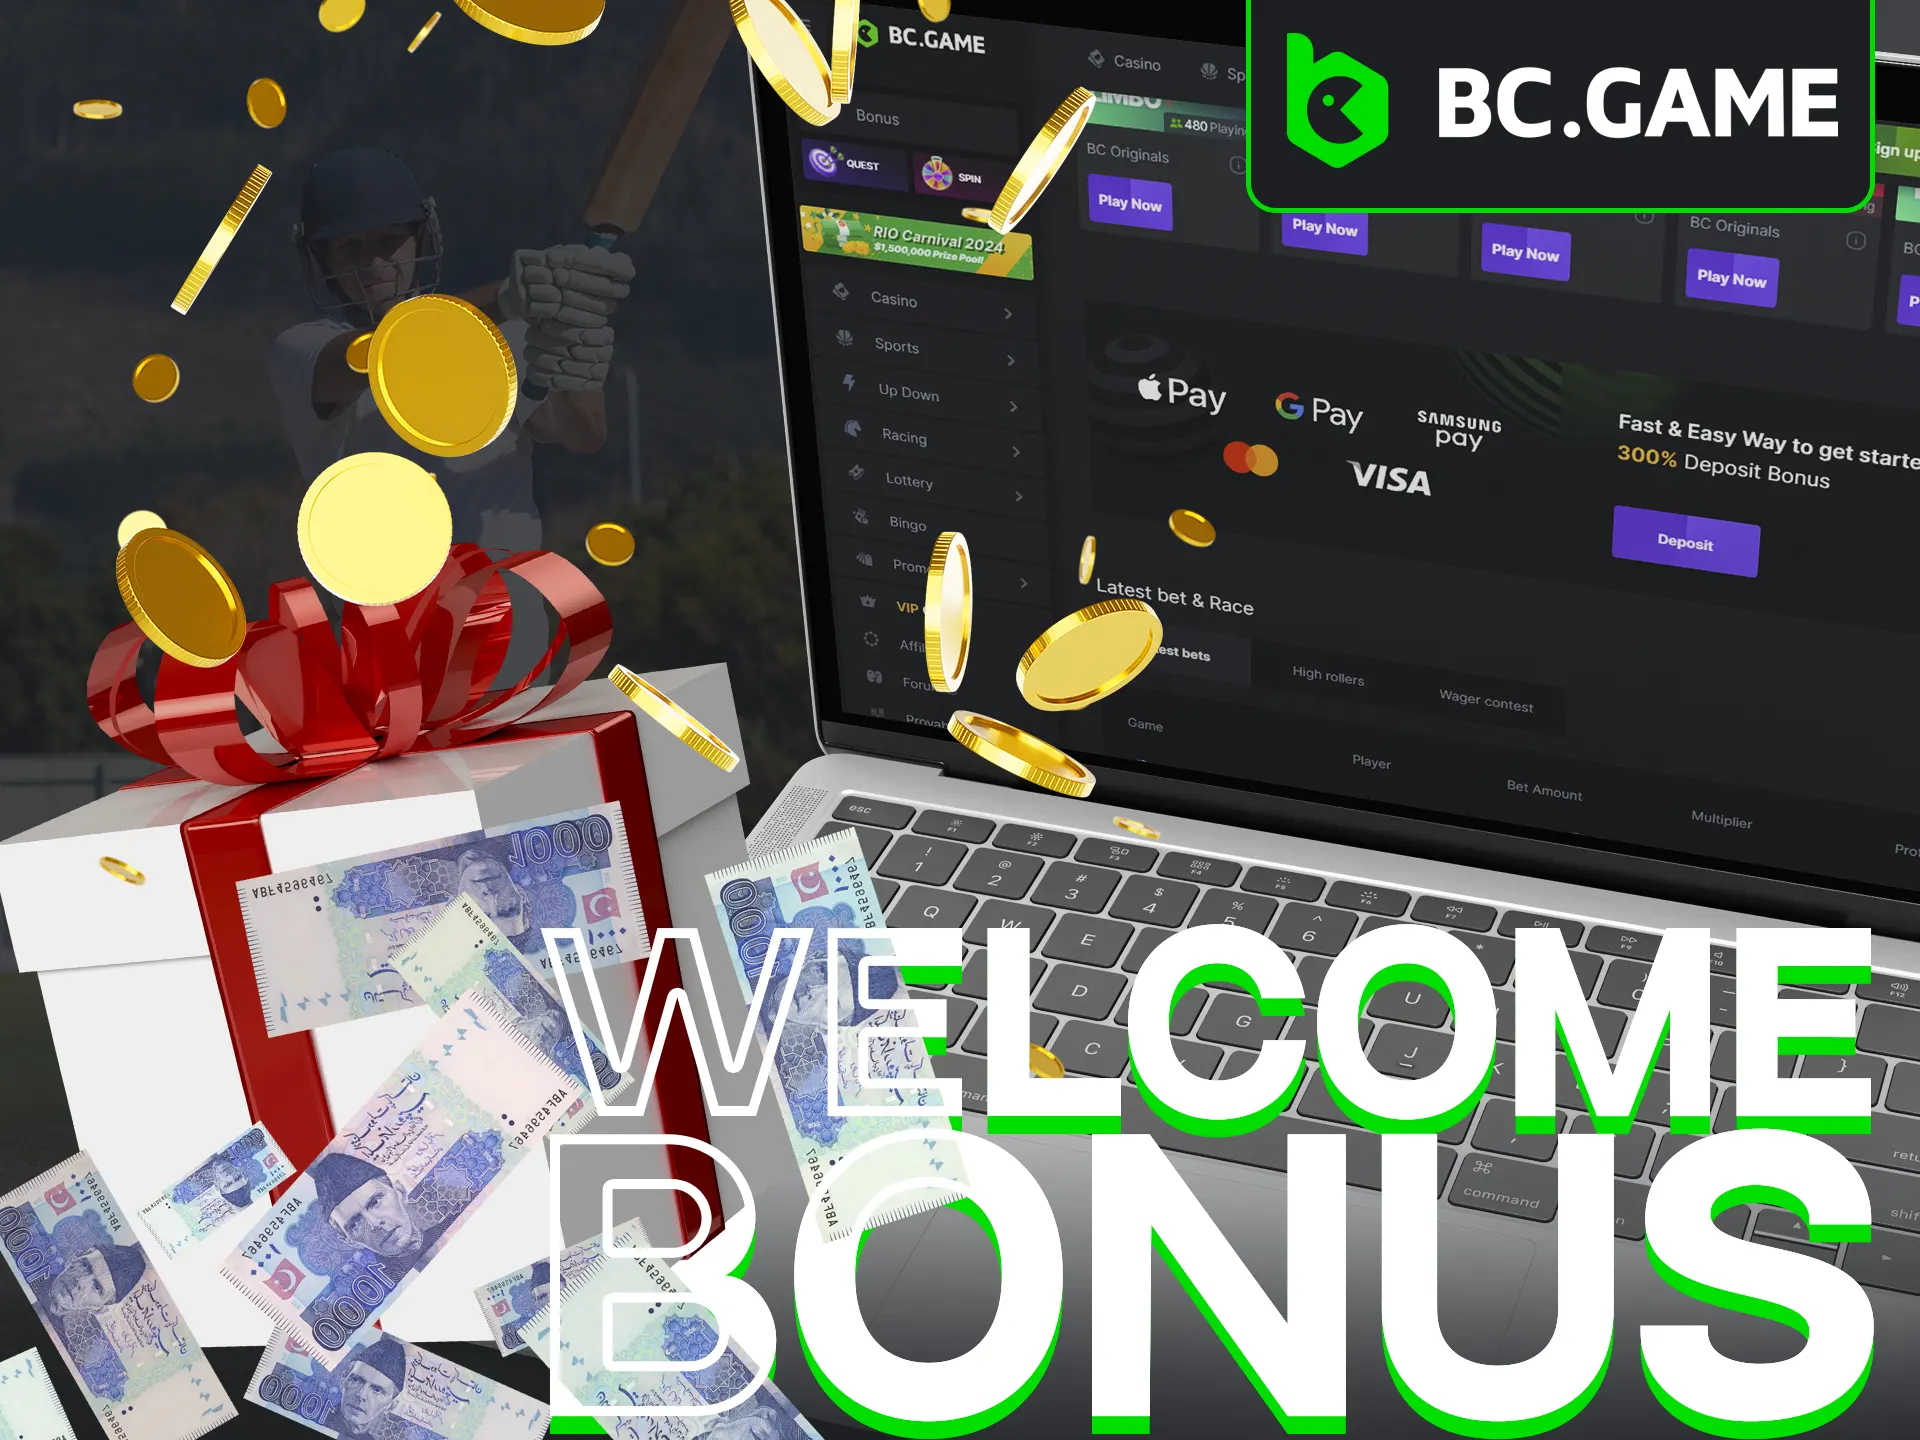 Get a 300% deposit bonus on BC Game.